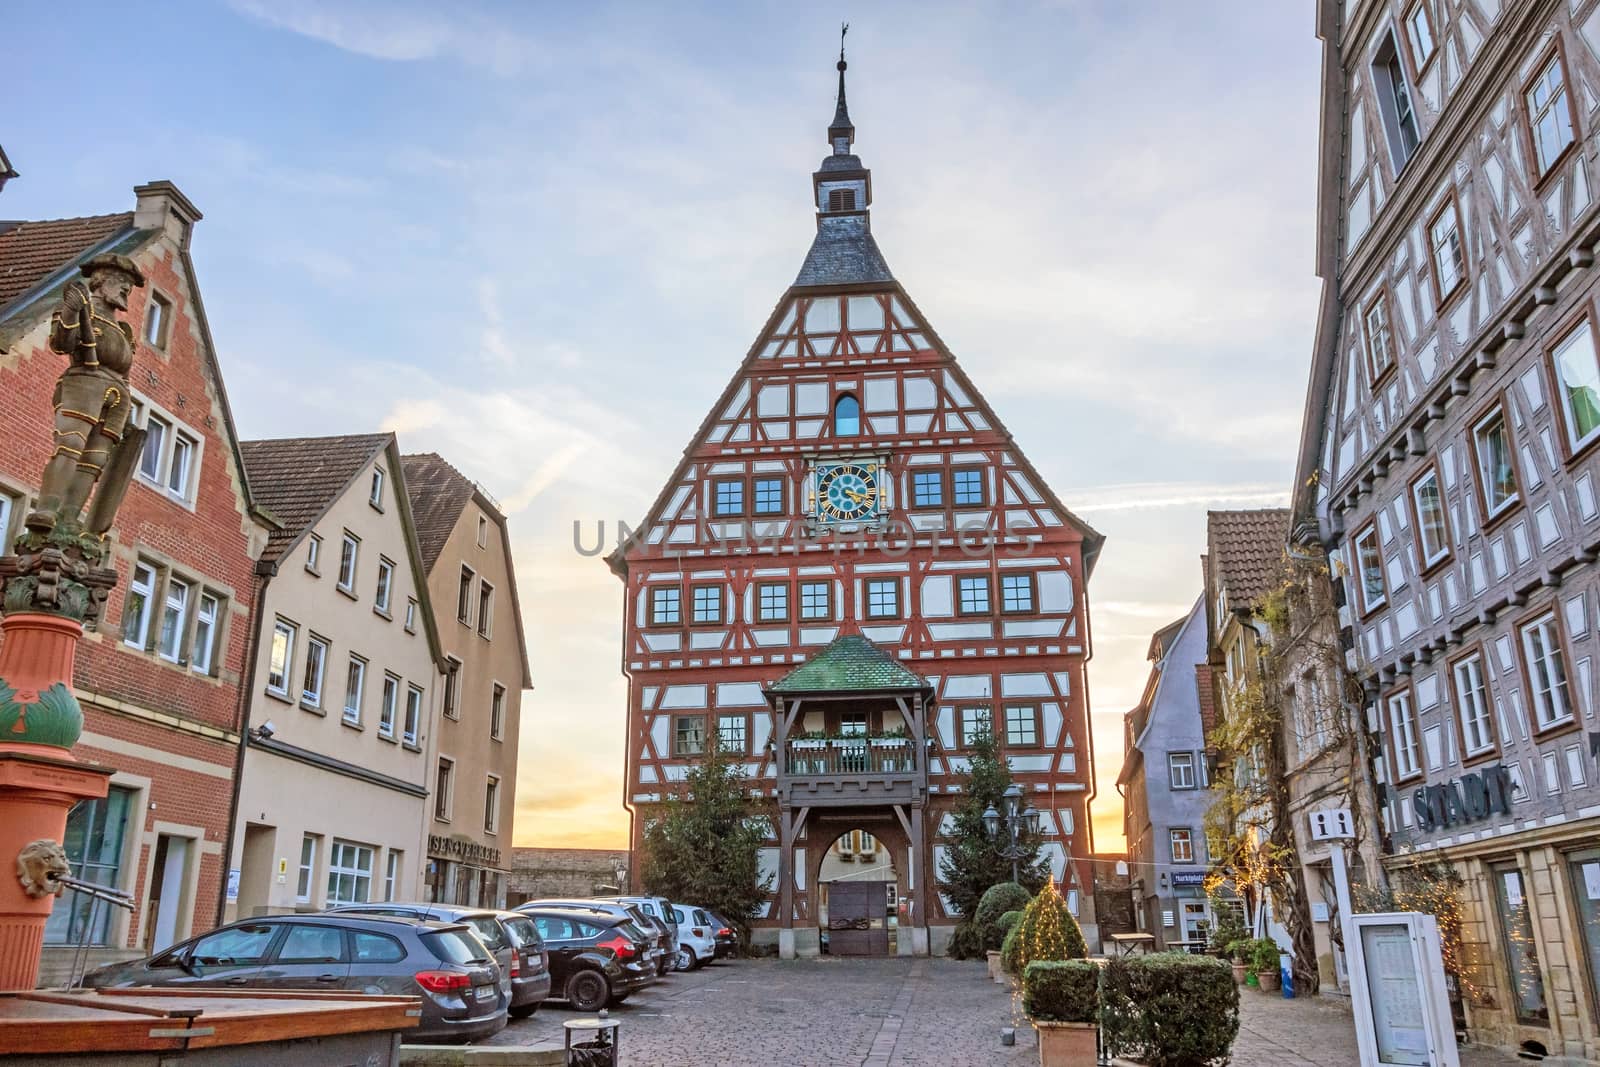 Besigheim, Germany - December 27, 2016: Townhall of Besigheim in the historic city district.